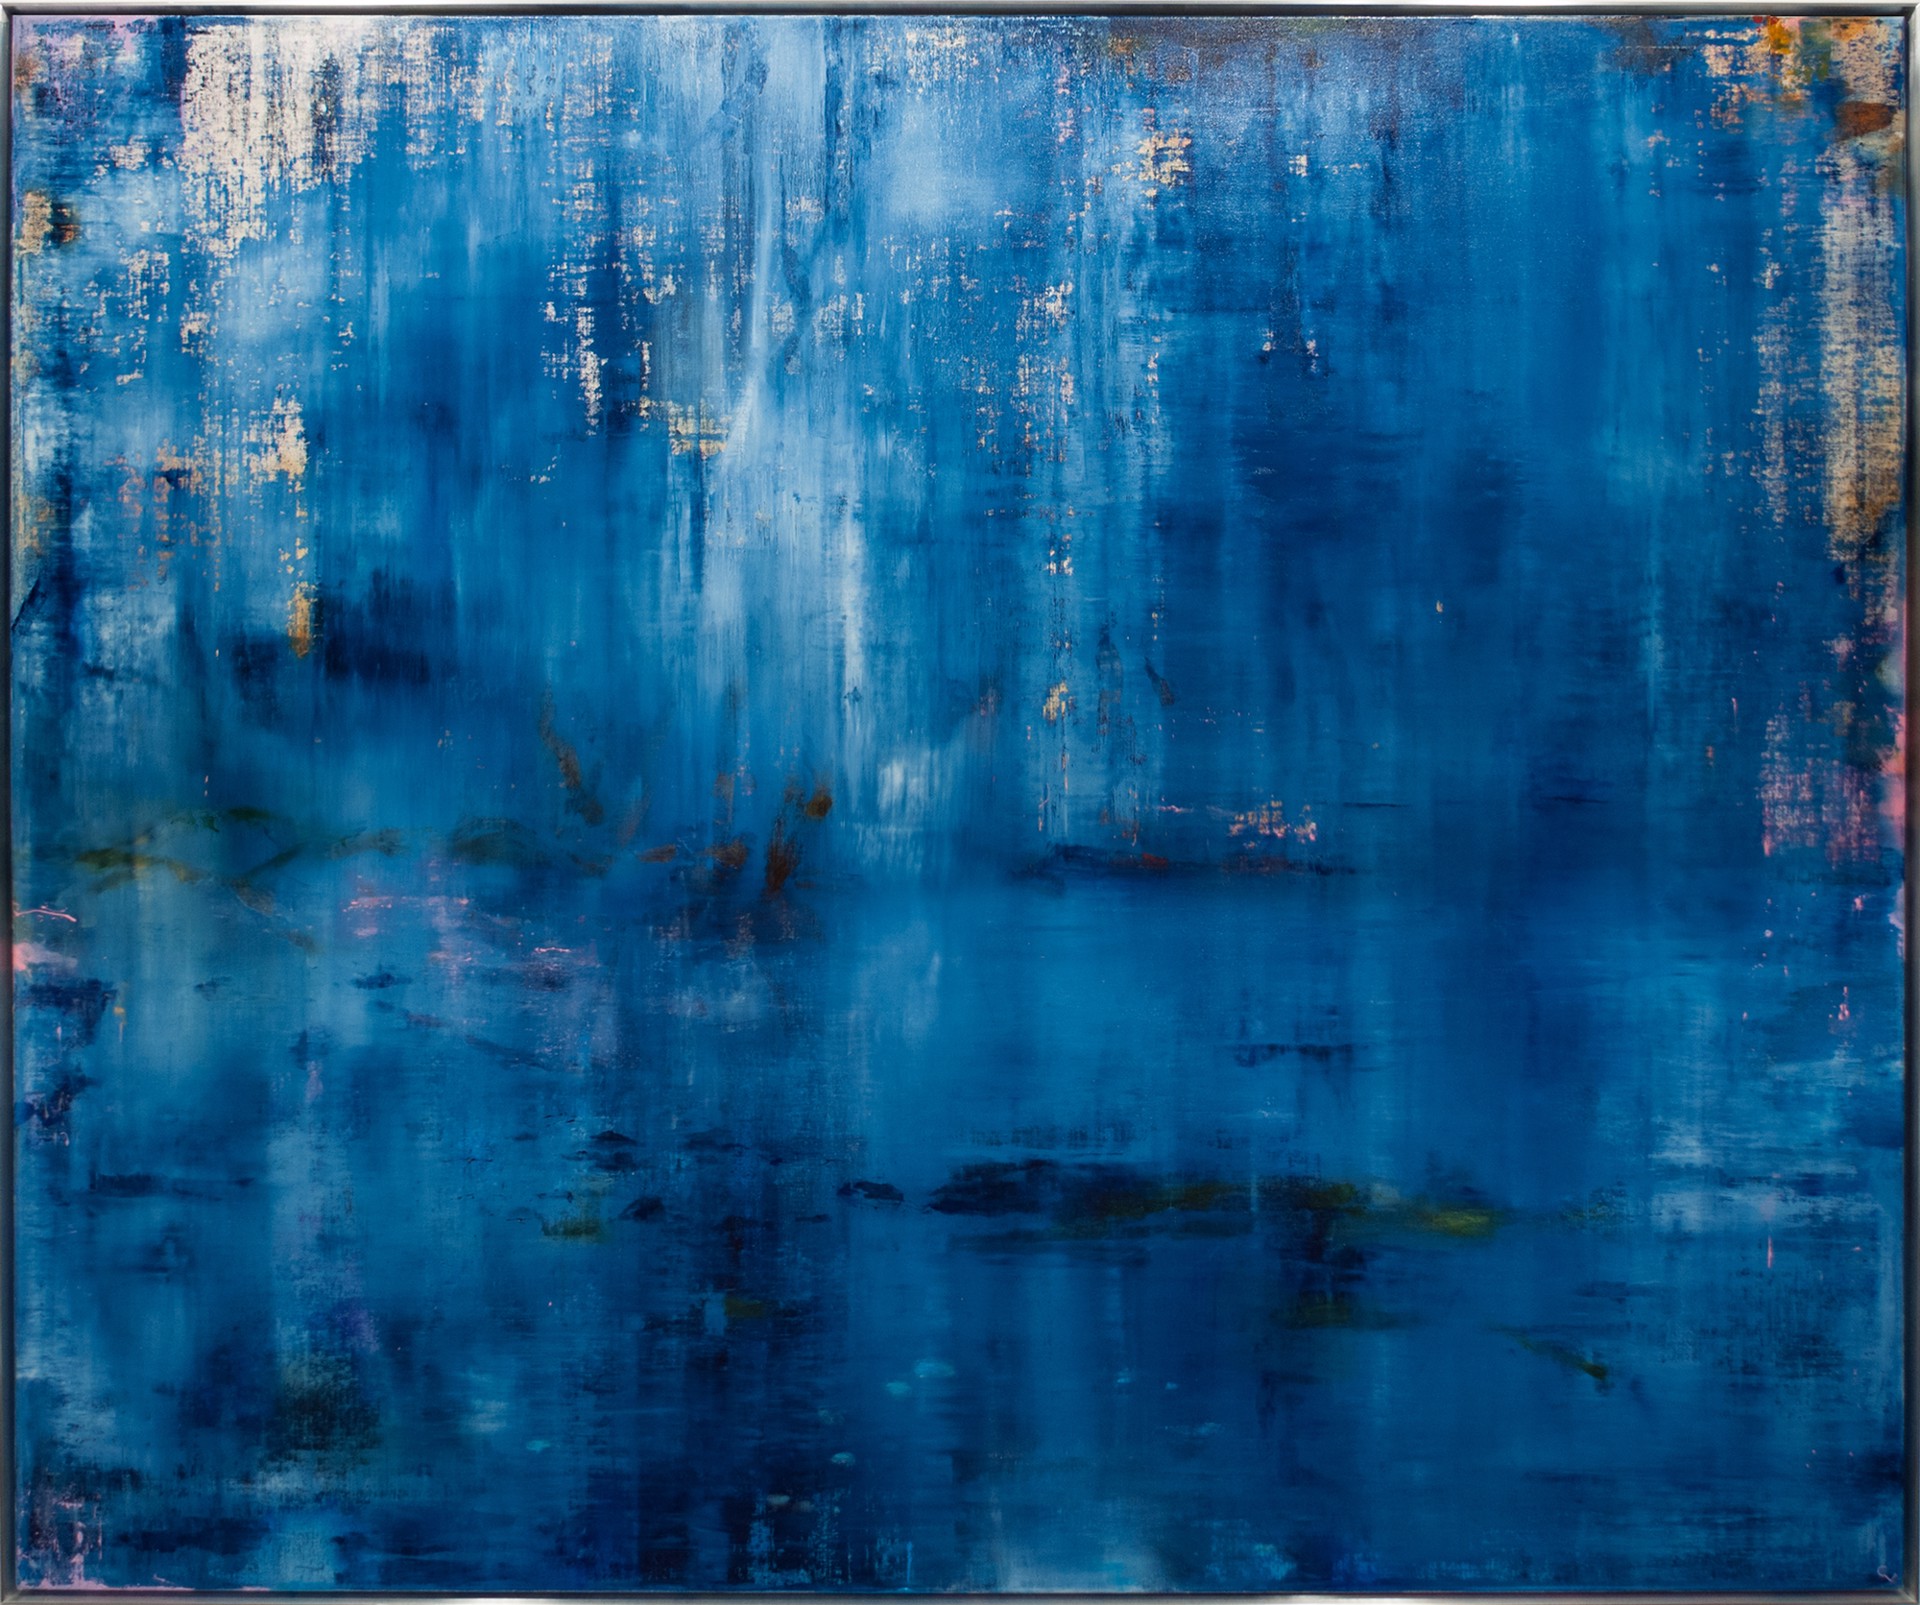 Le Grande Bleu by Chris Veeneman